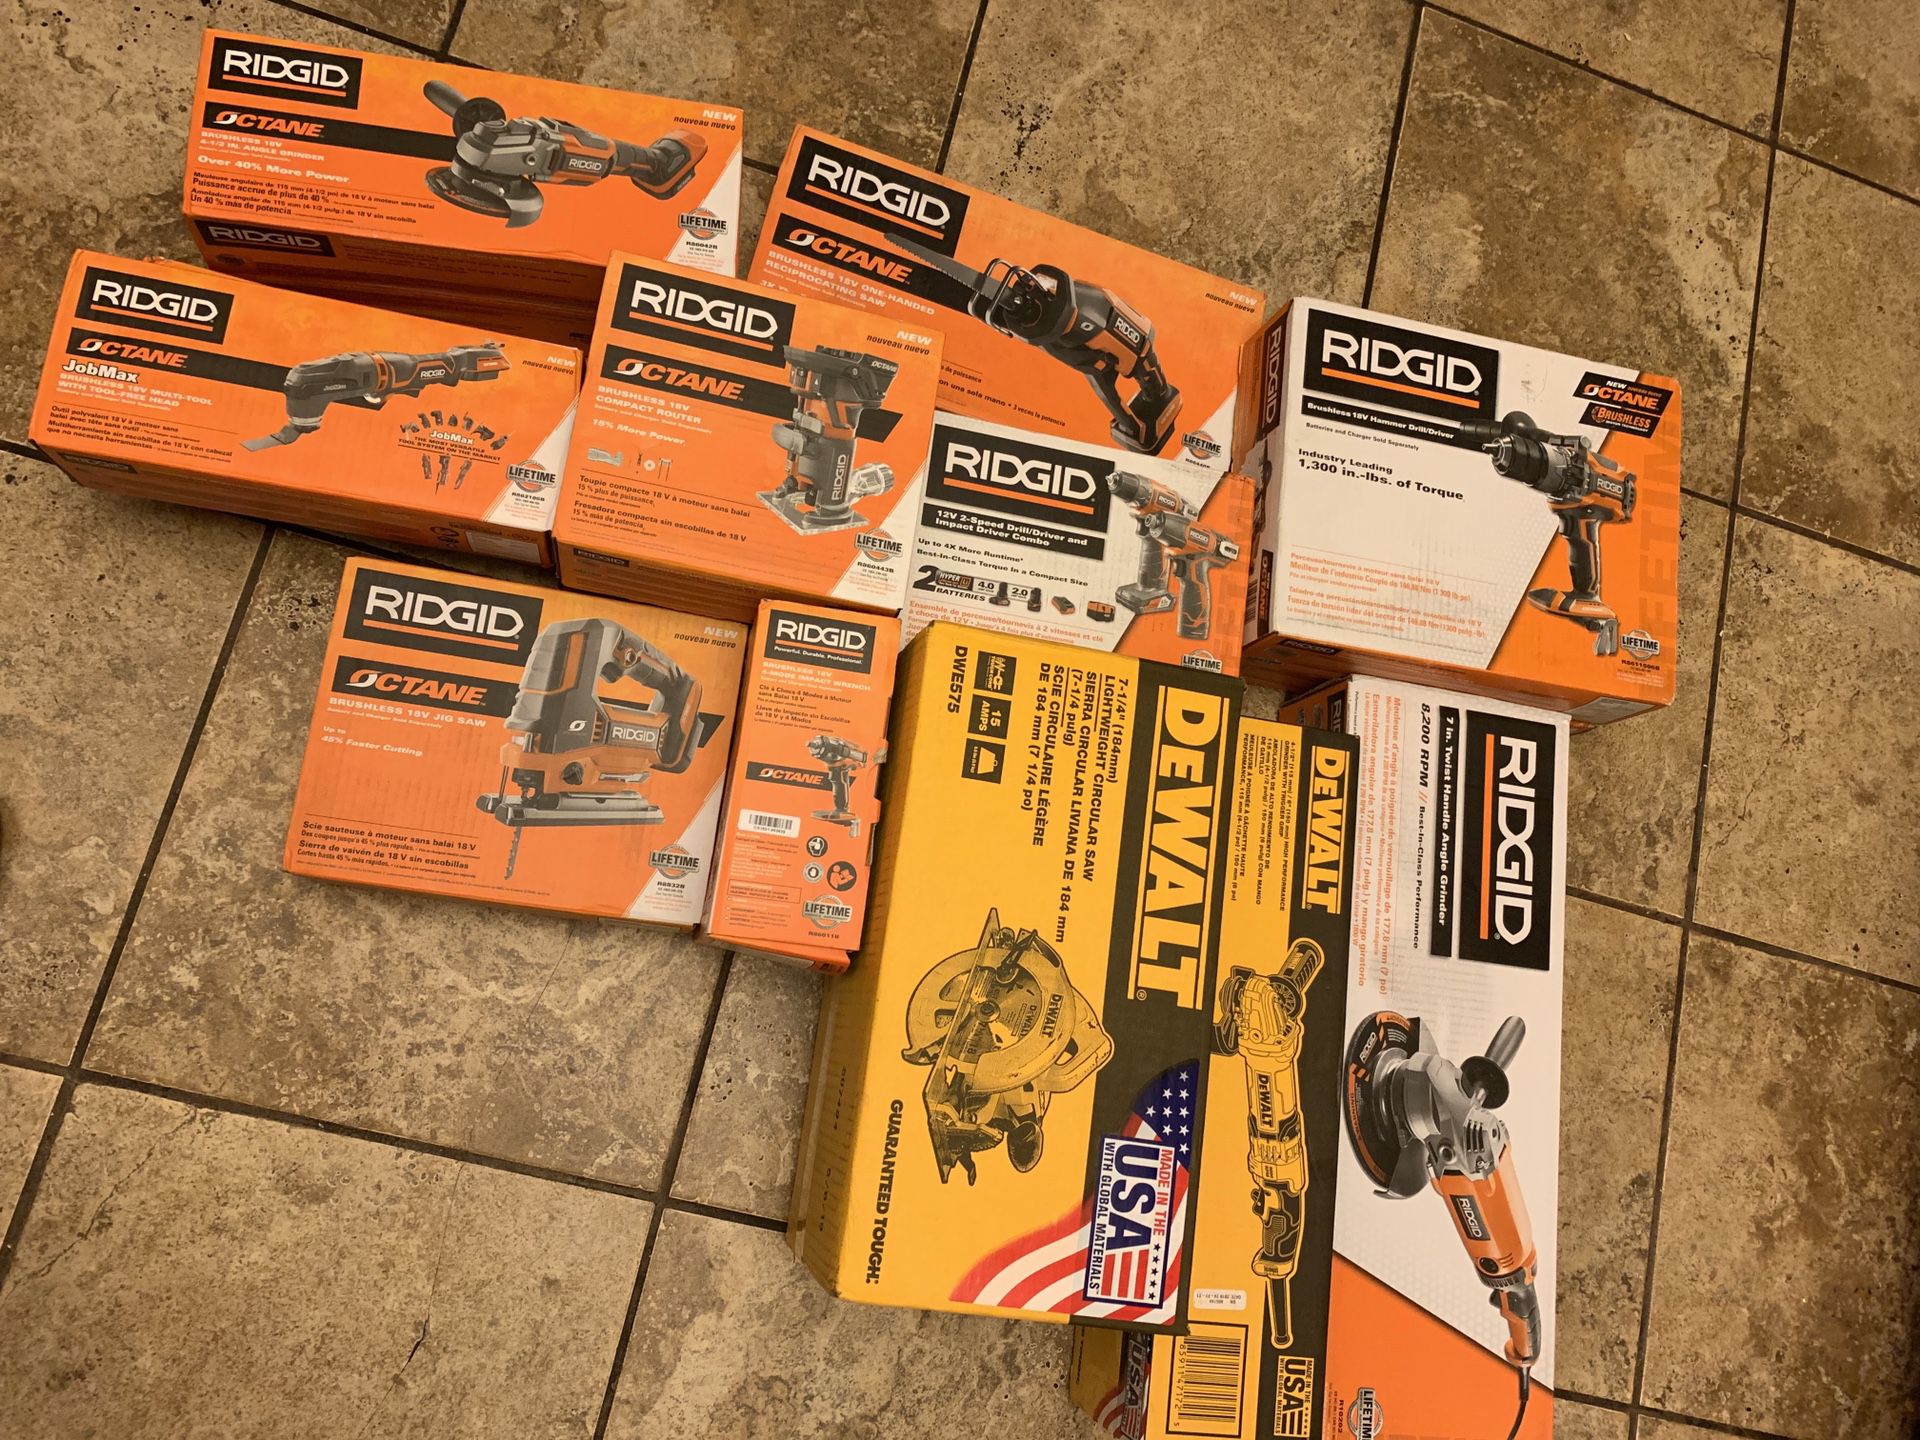 Brand new with box Ridgid octane power tools $80 each tool